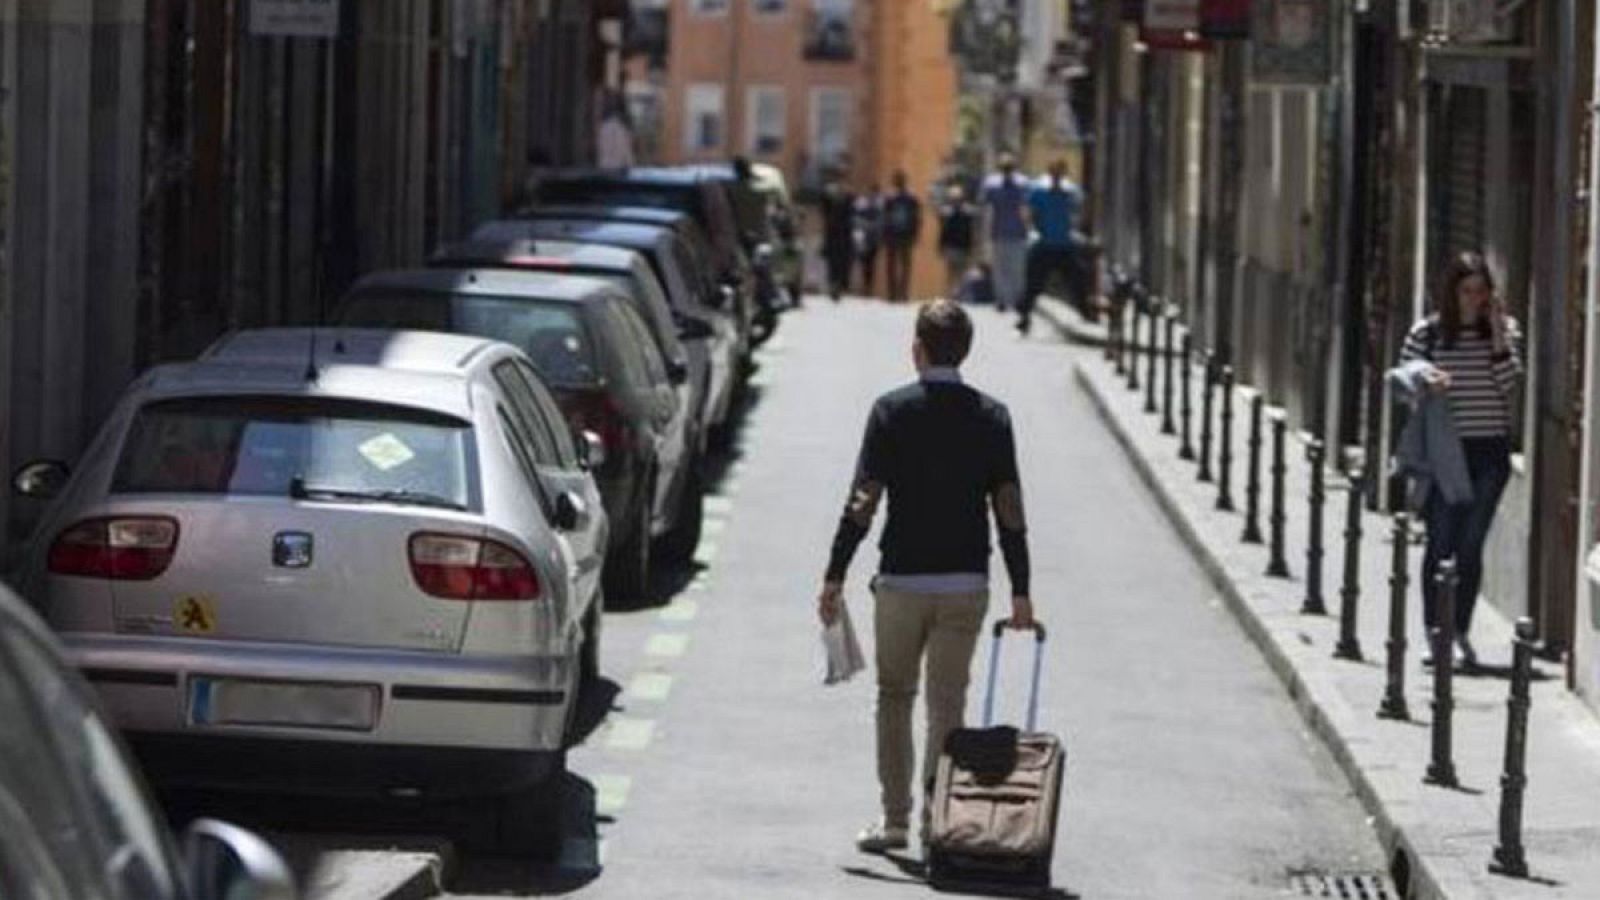 Un turista sube con su equipaje por una calle del centro de Madrid